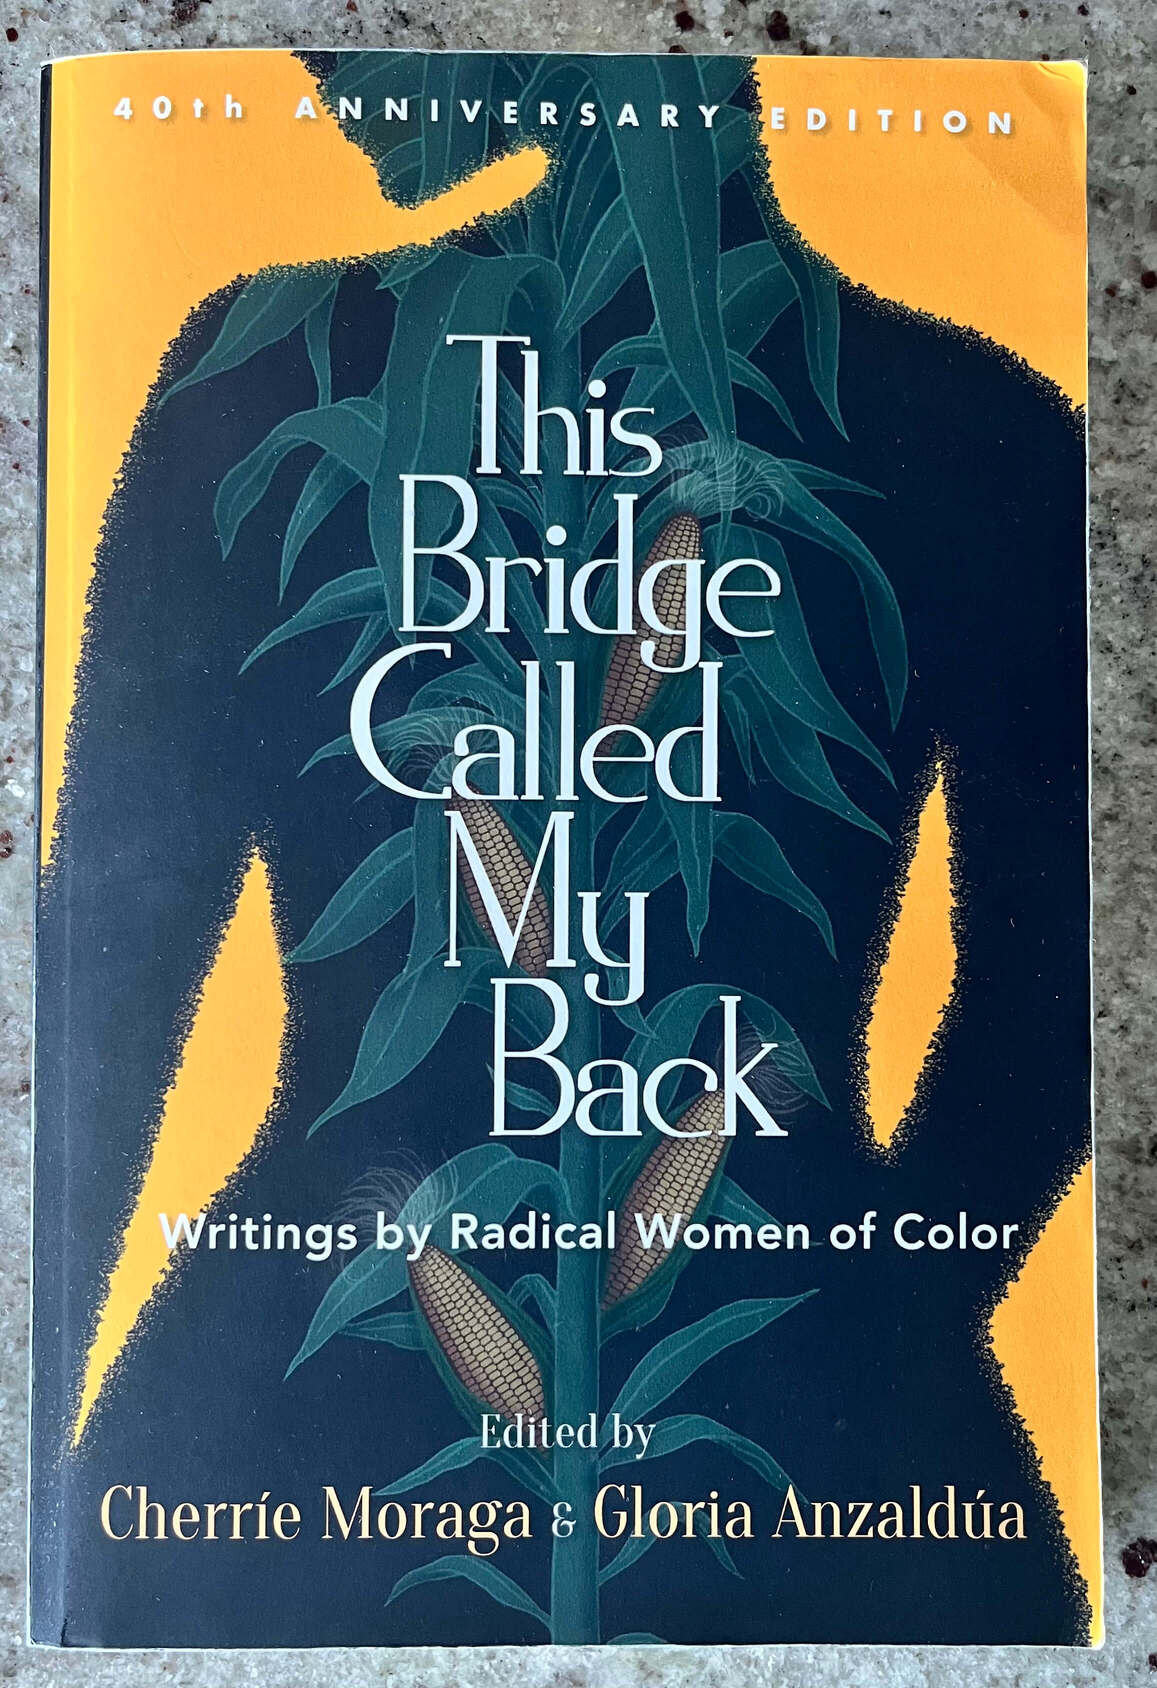 “This Bridge Called My Back: Writings by Radical Women of Color” Edited bv Cherrie Moraga & Gloria Anzaldúa